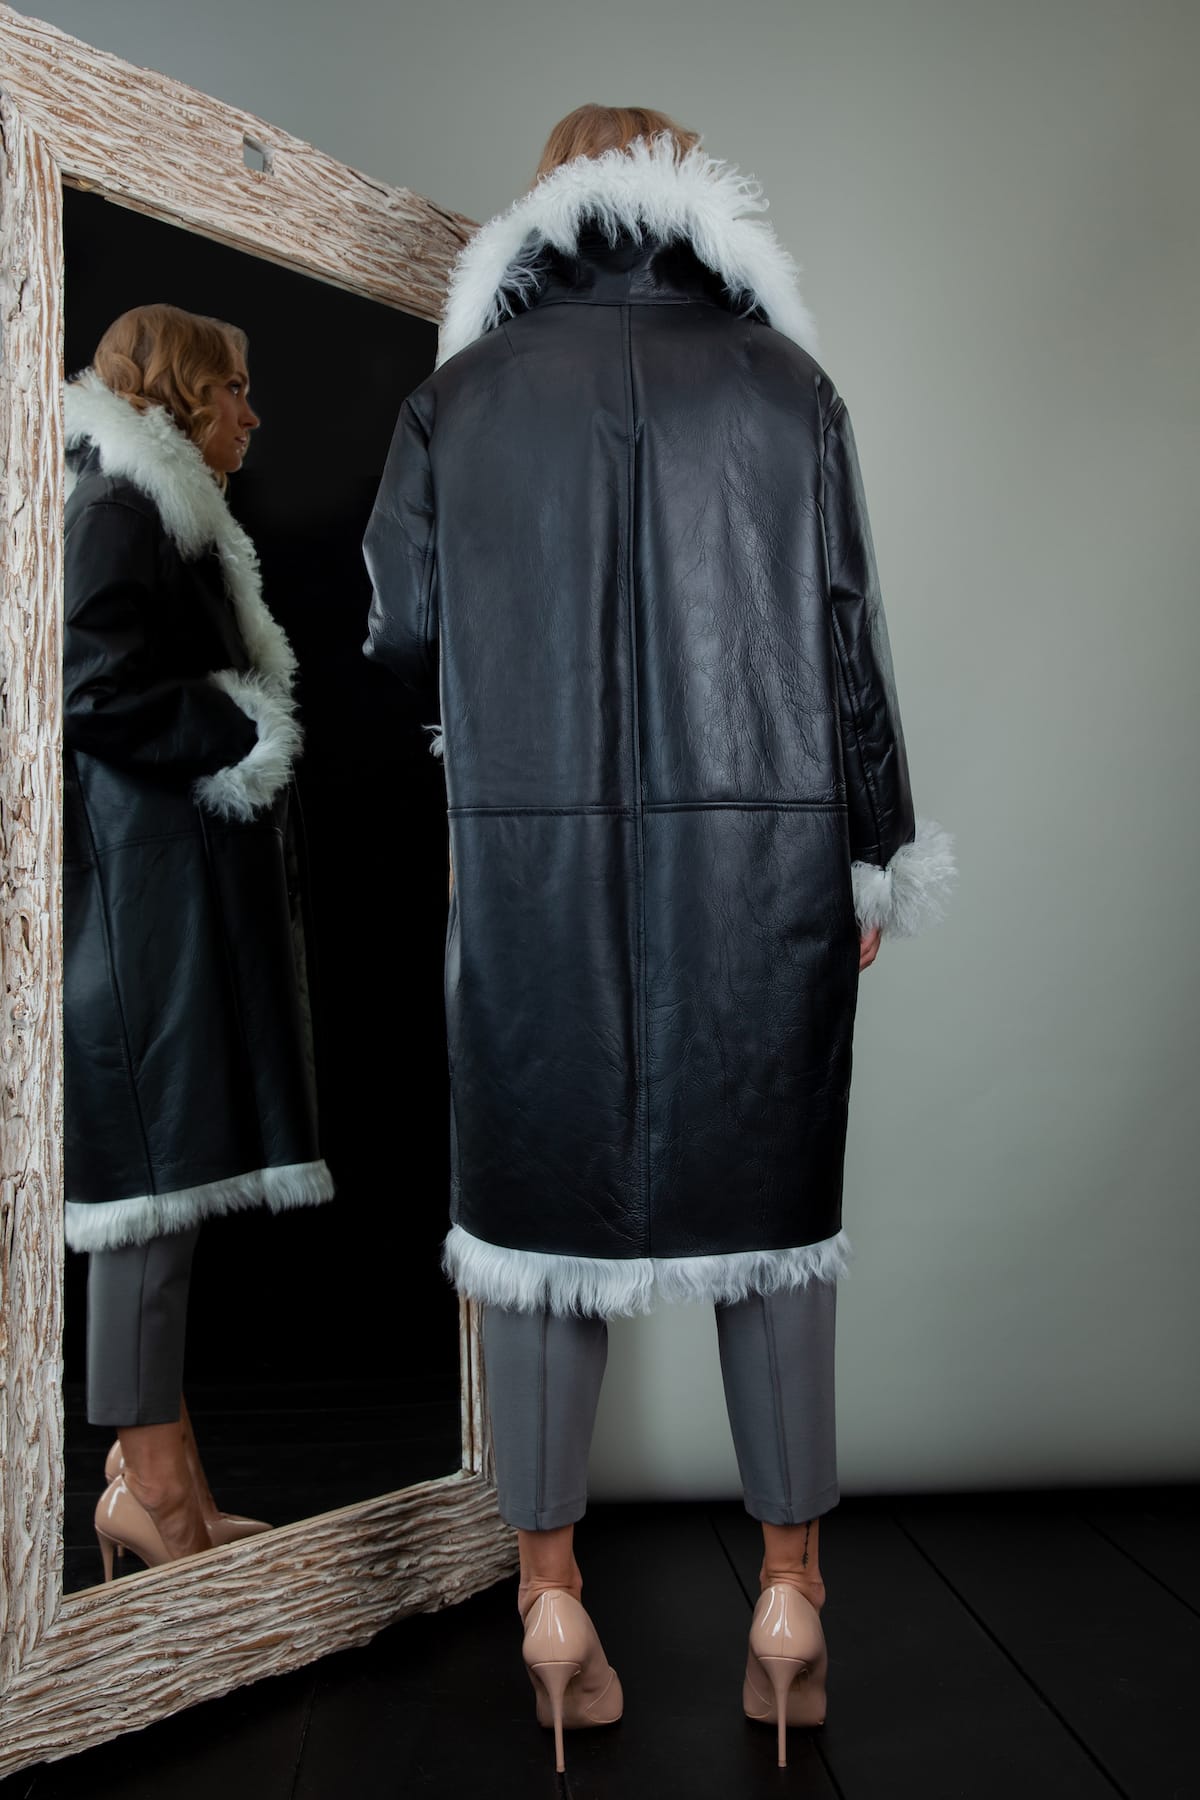 White Fur-Lined & Black Leather Sheepskin Coat | Handmade by NordFur